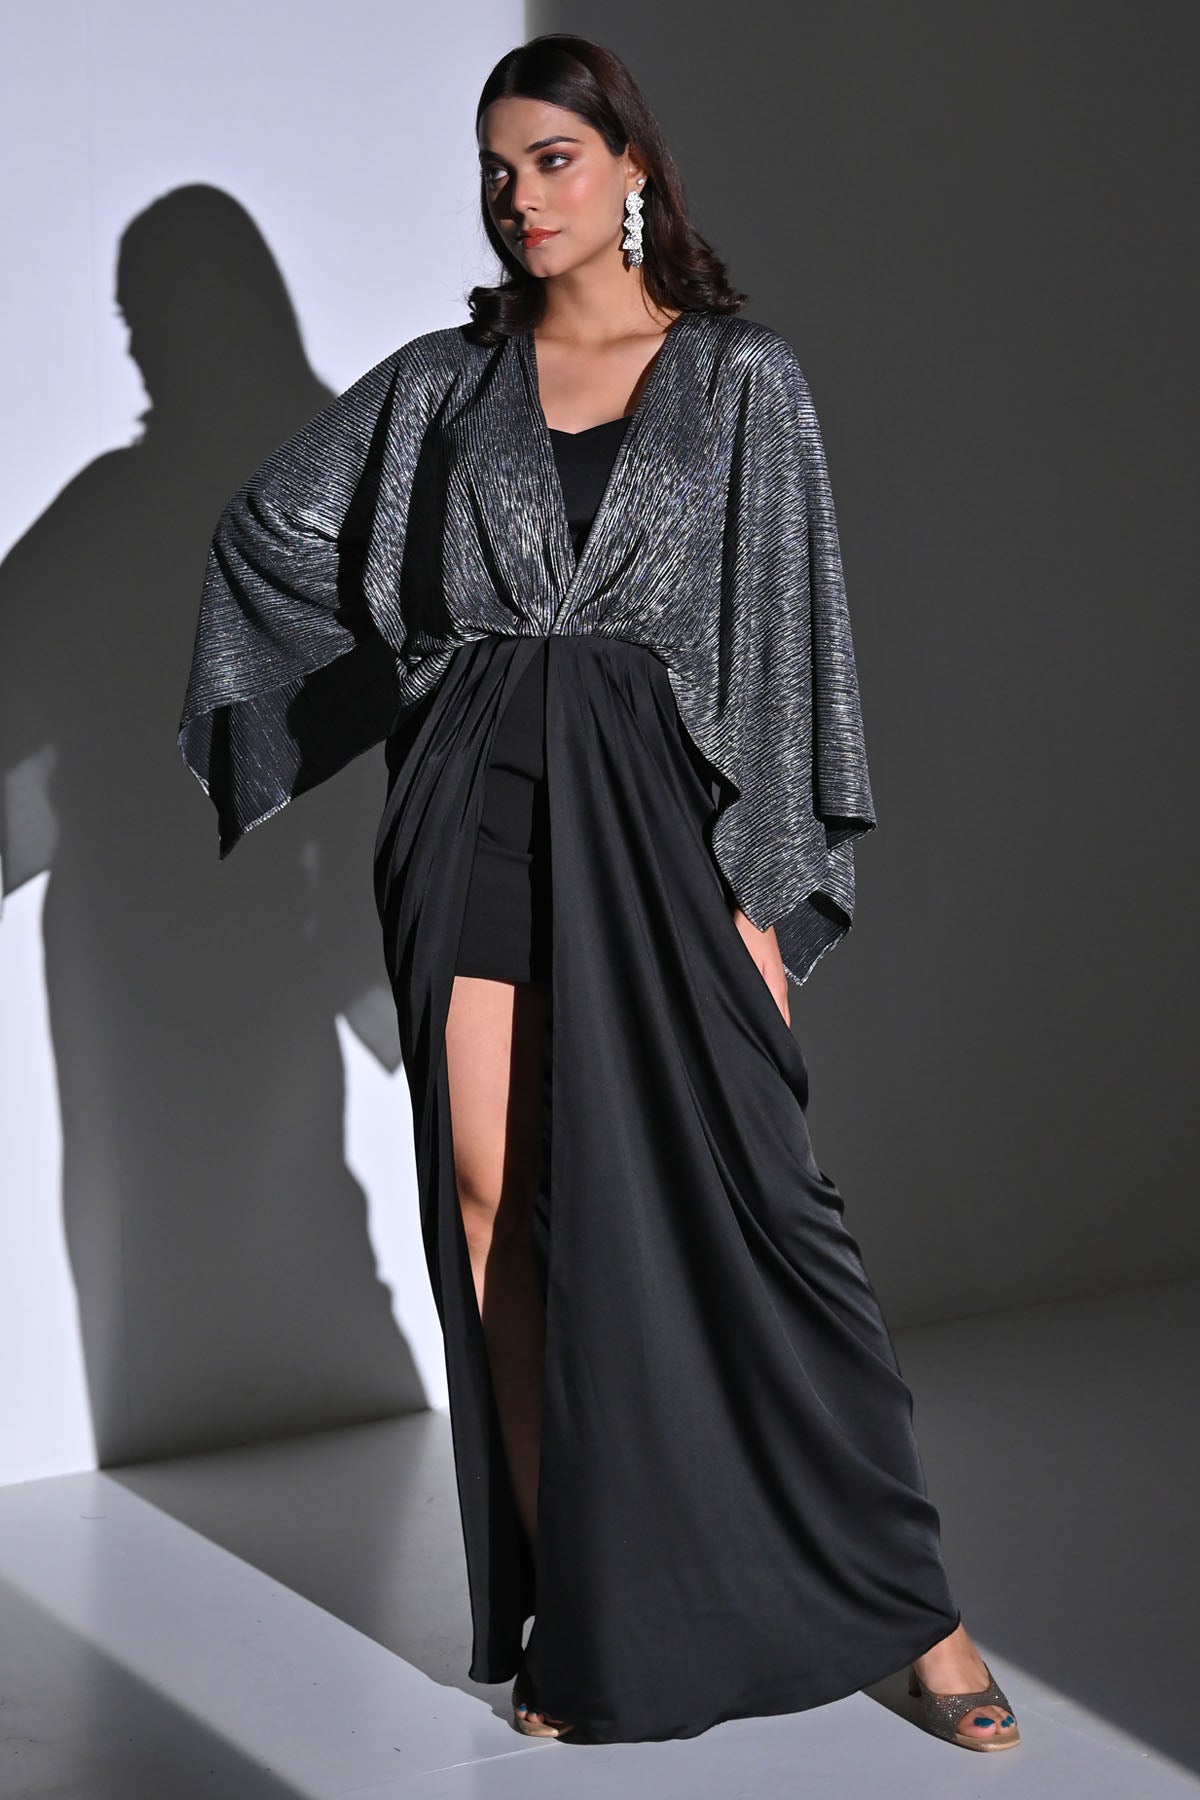 The Black Lover Black Front Cut Kaftan Dress for women online at ScrollnShops